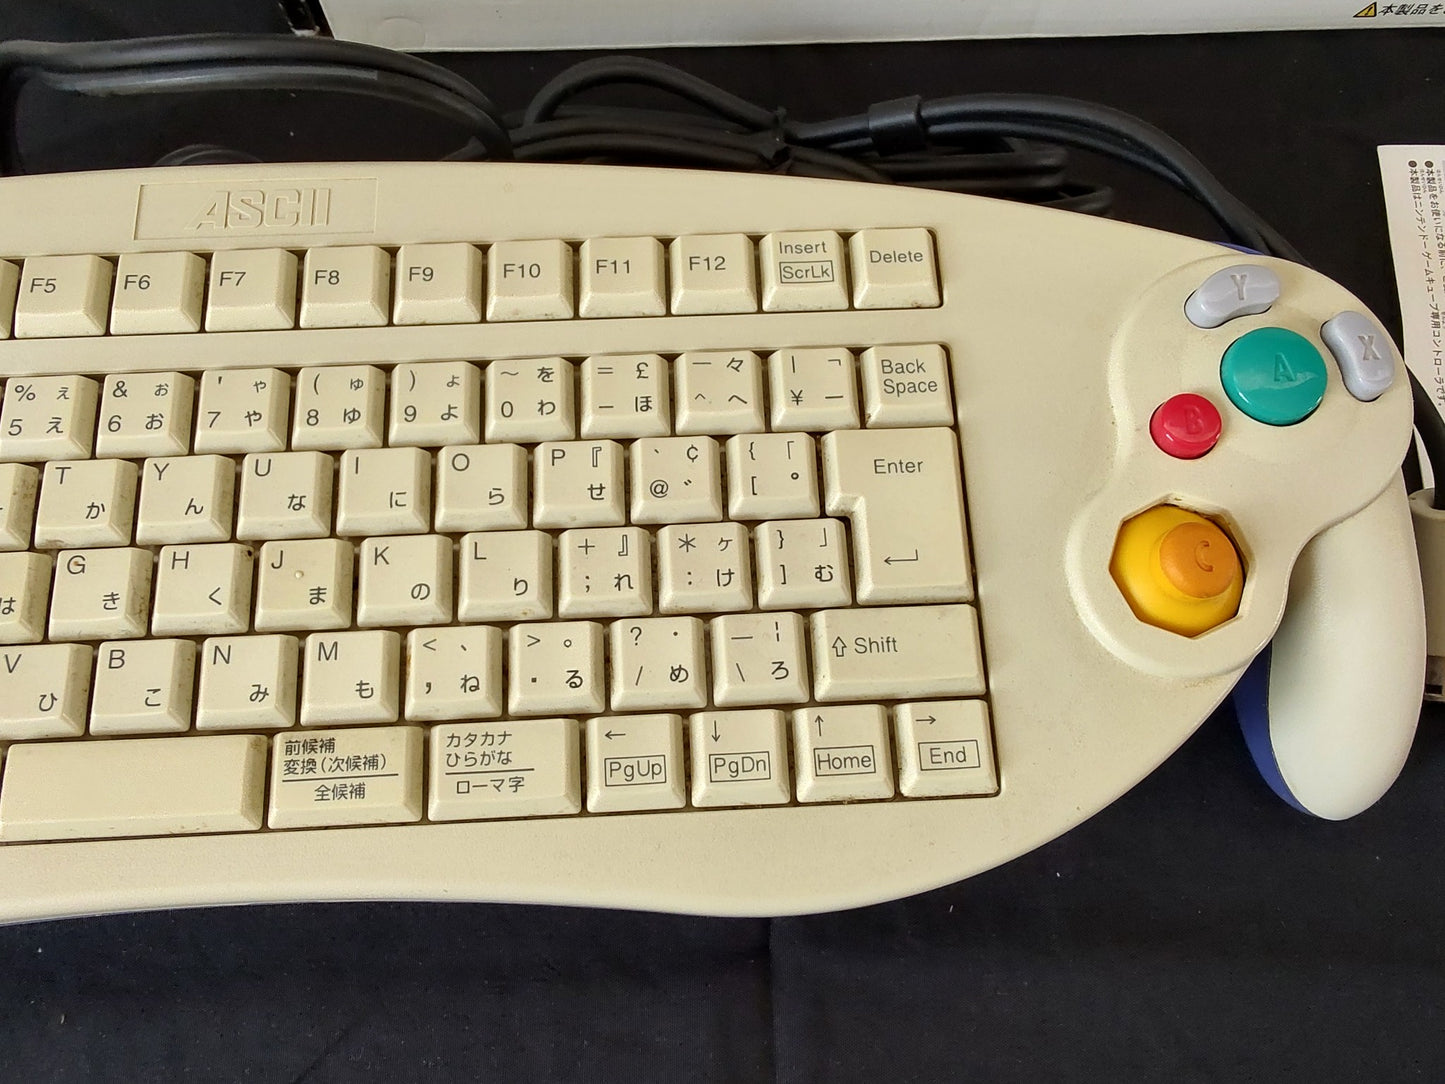 Nintendo GameCube ASCII keyboard Controller ACS-1901PO, not tested-f0512-